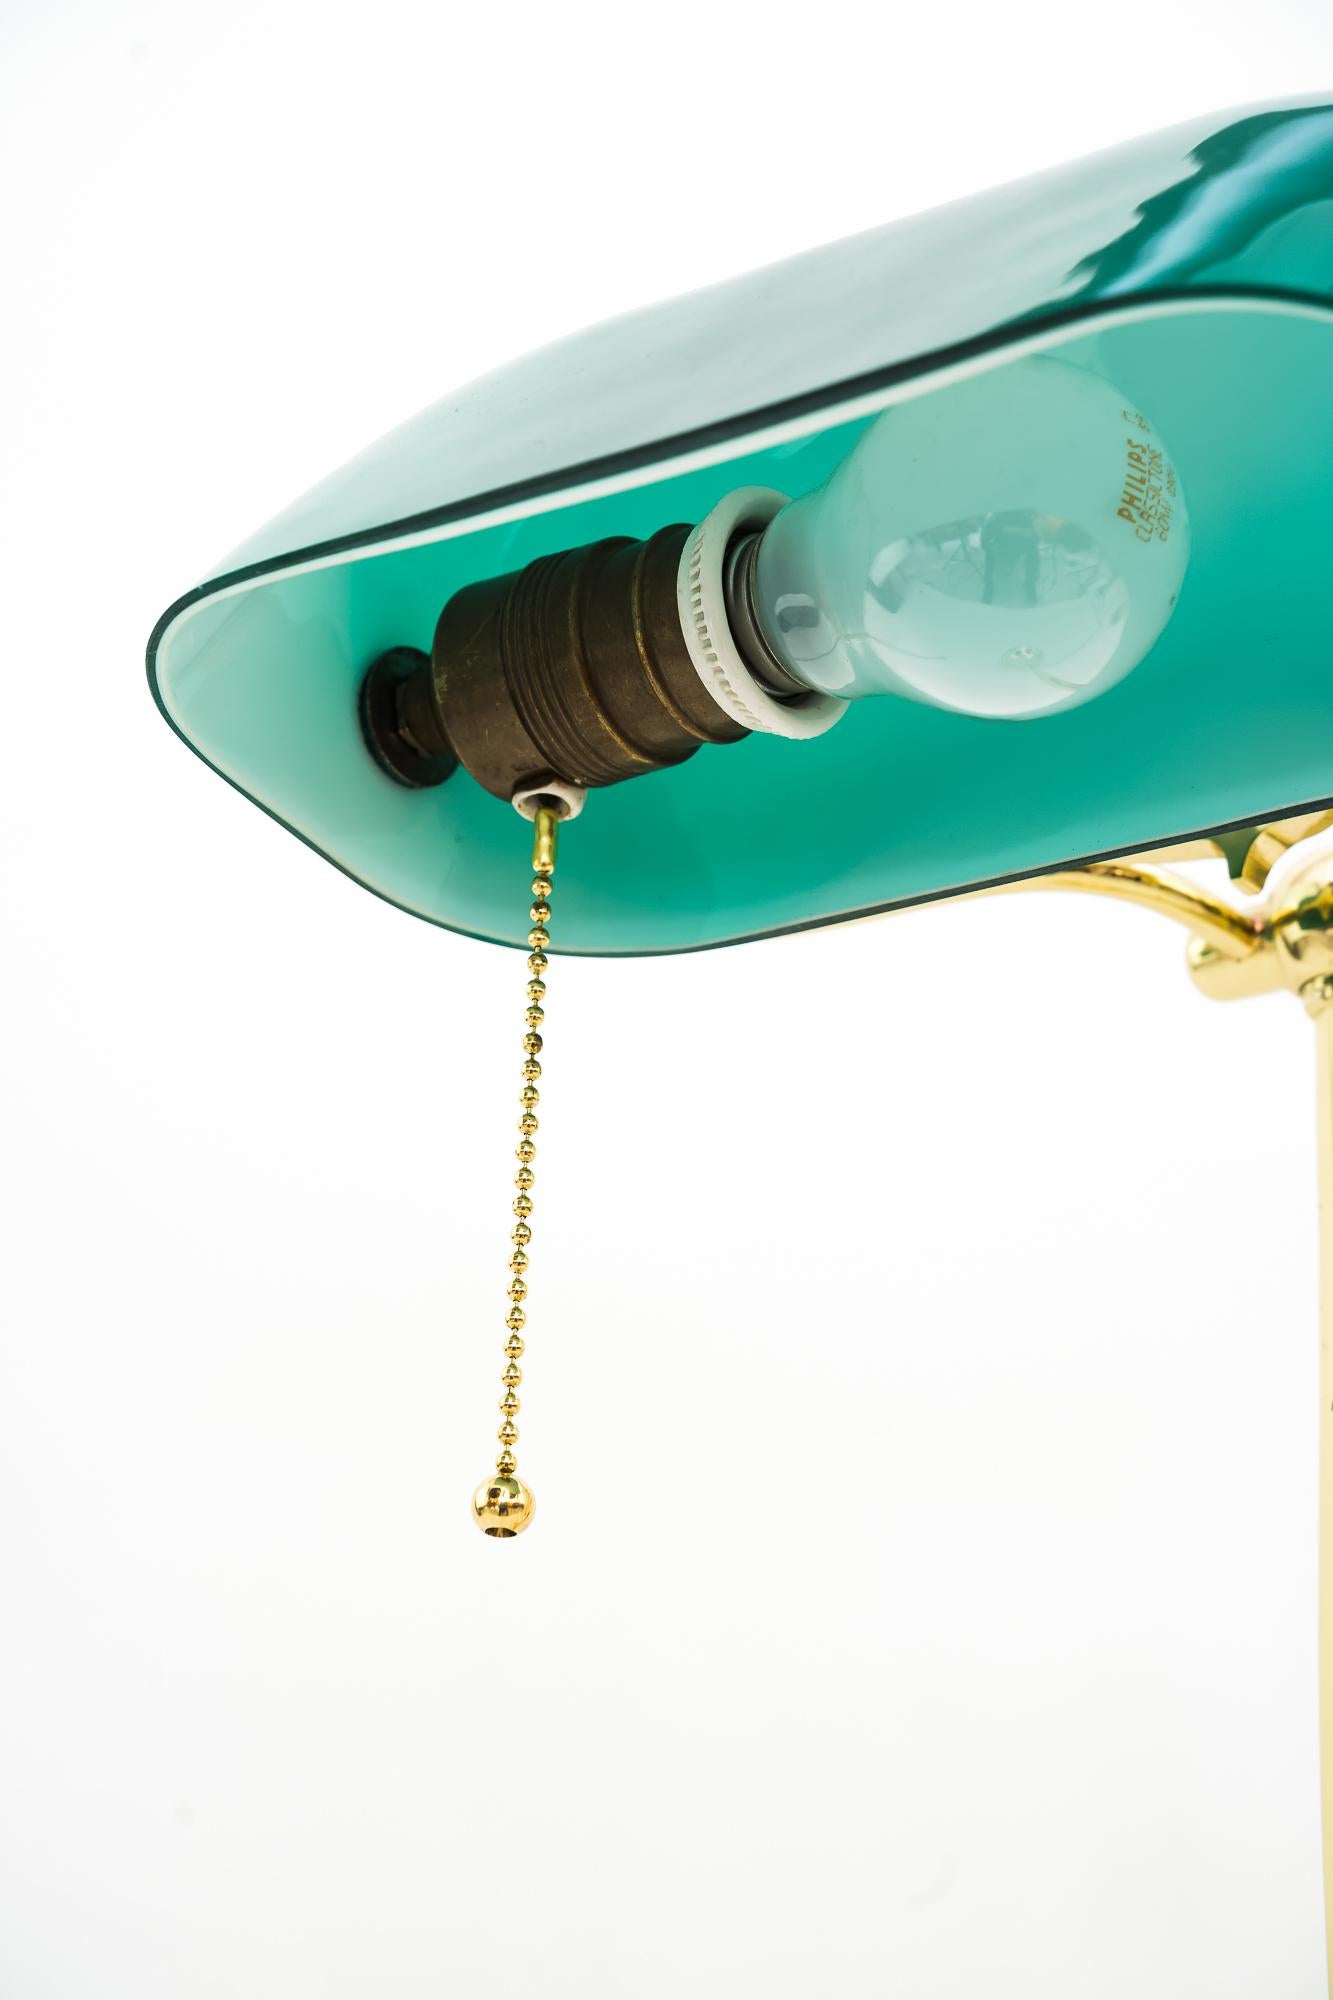 Brass Rare Art Deco Table Lamp with Original Glass Shade Vienna Around 1920s